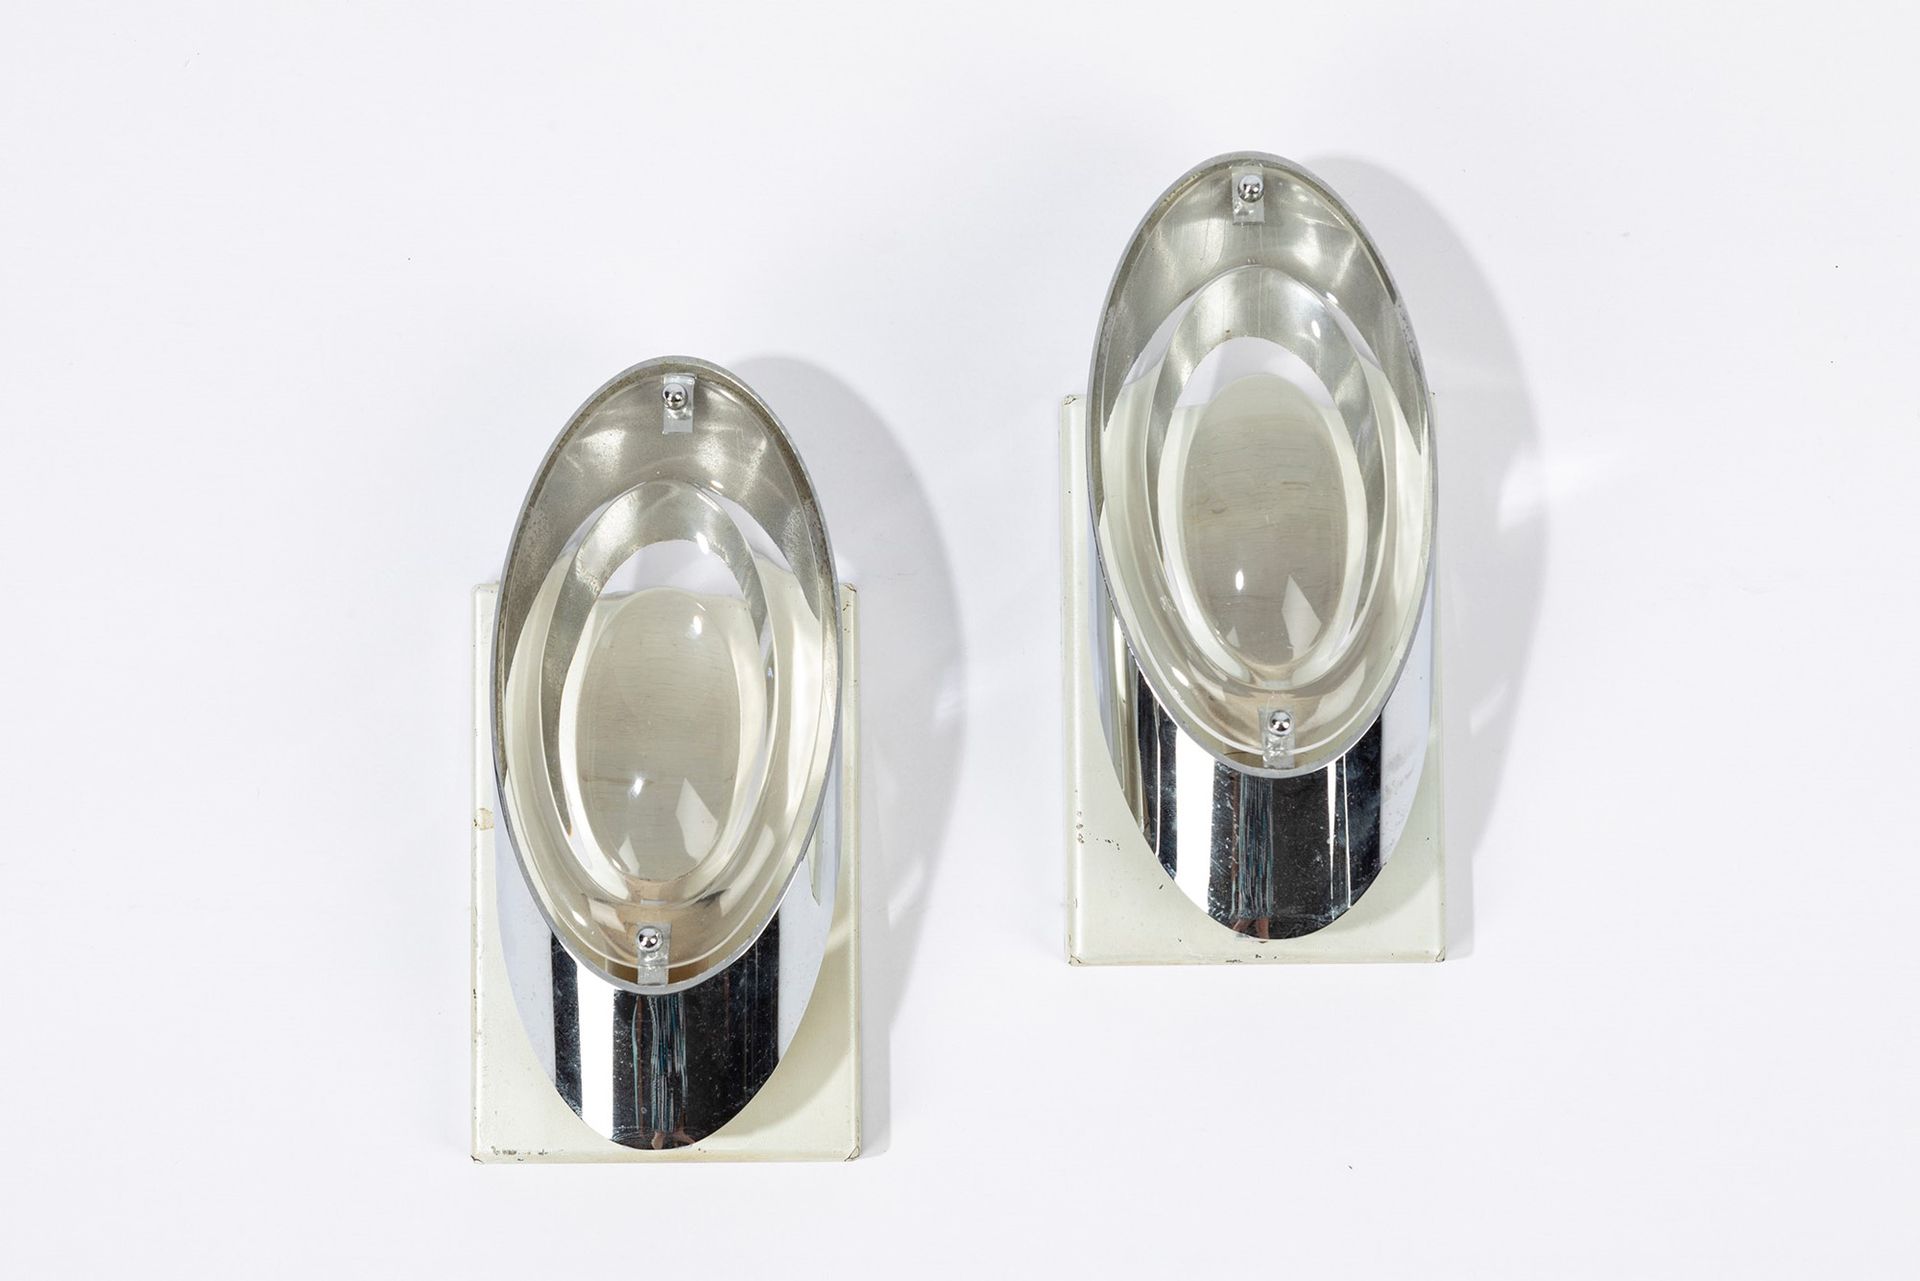 OSCAR TORLASCO Applique, 70's period

h cm 10,5 x 22 x 7
glazed chromed metal, f&hellip;